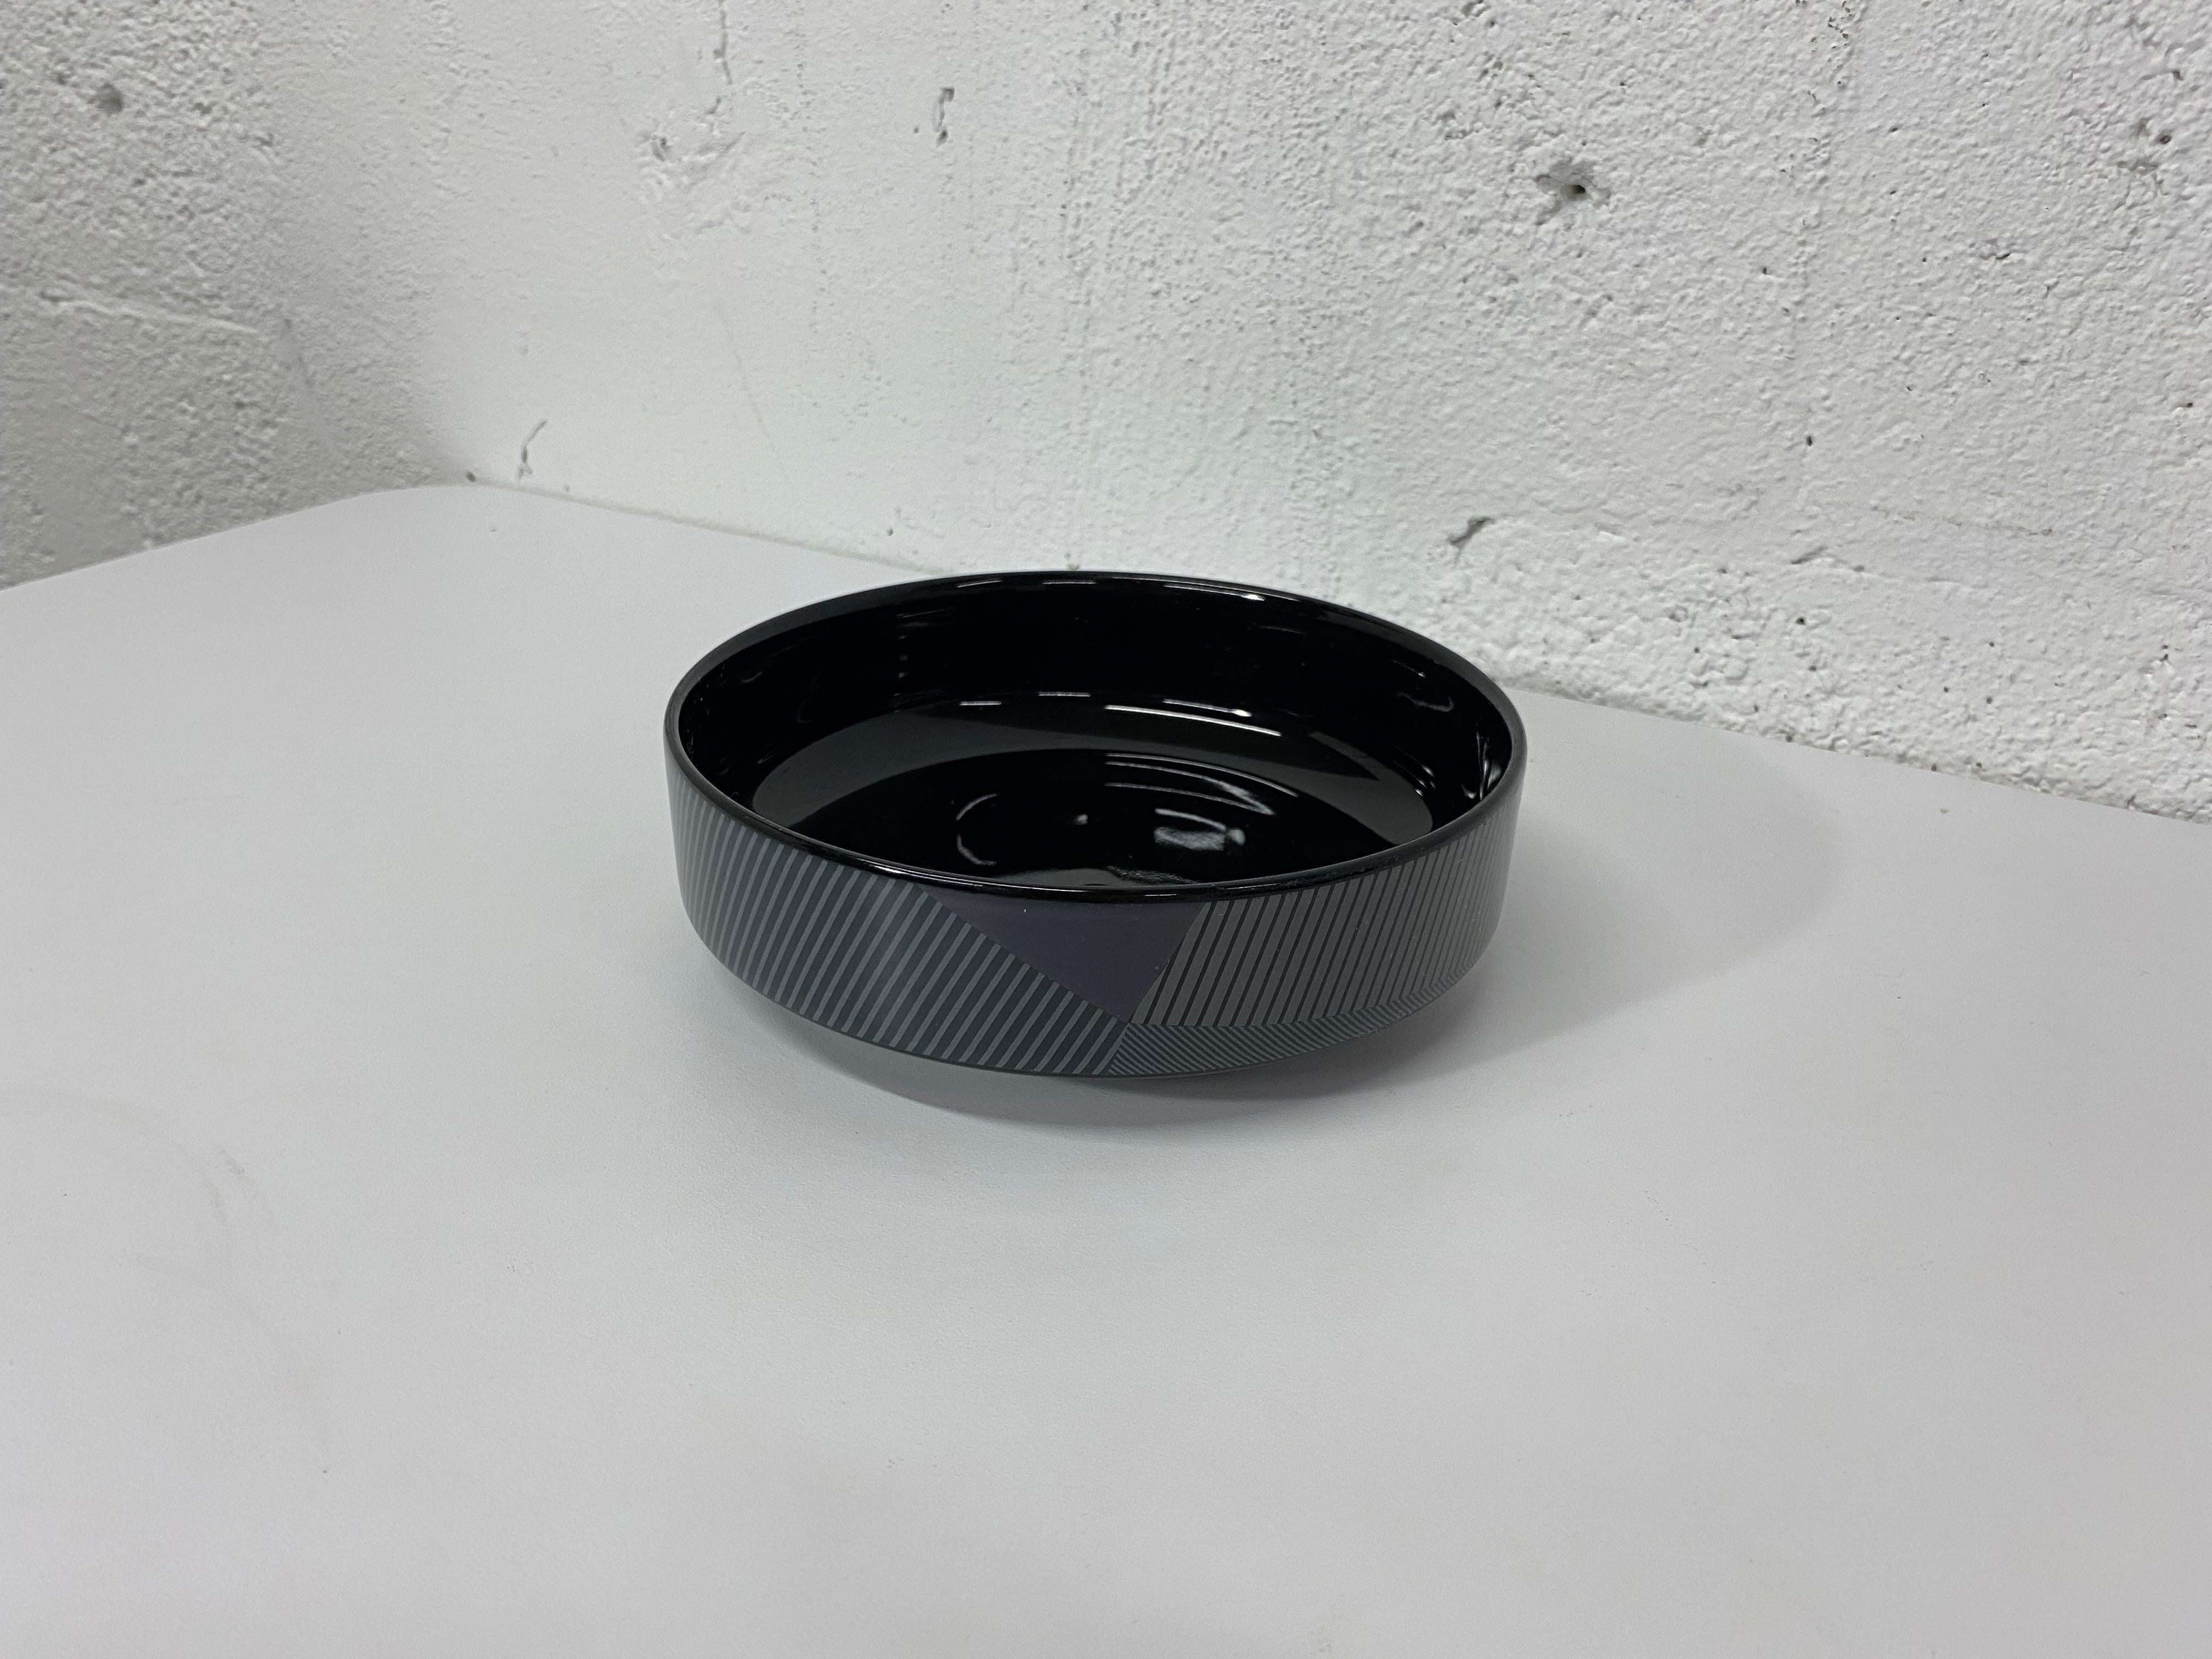 Black ceramic bowl with postmodern geometric design by Daniel Hechter, Paris.